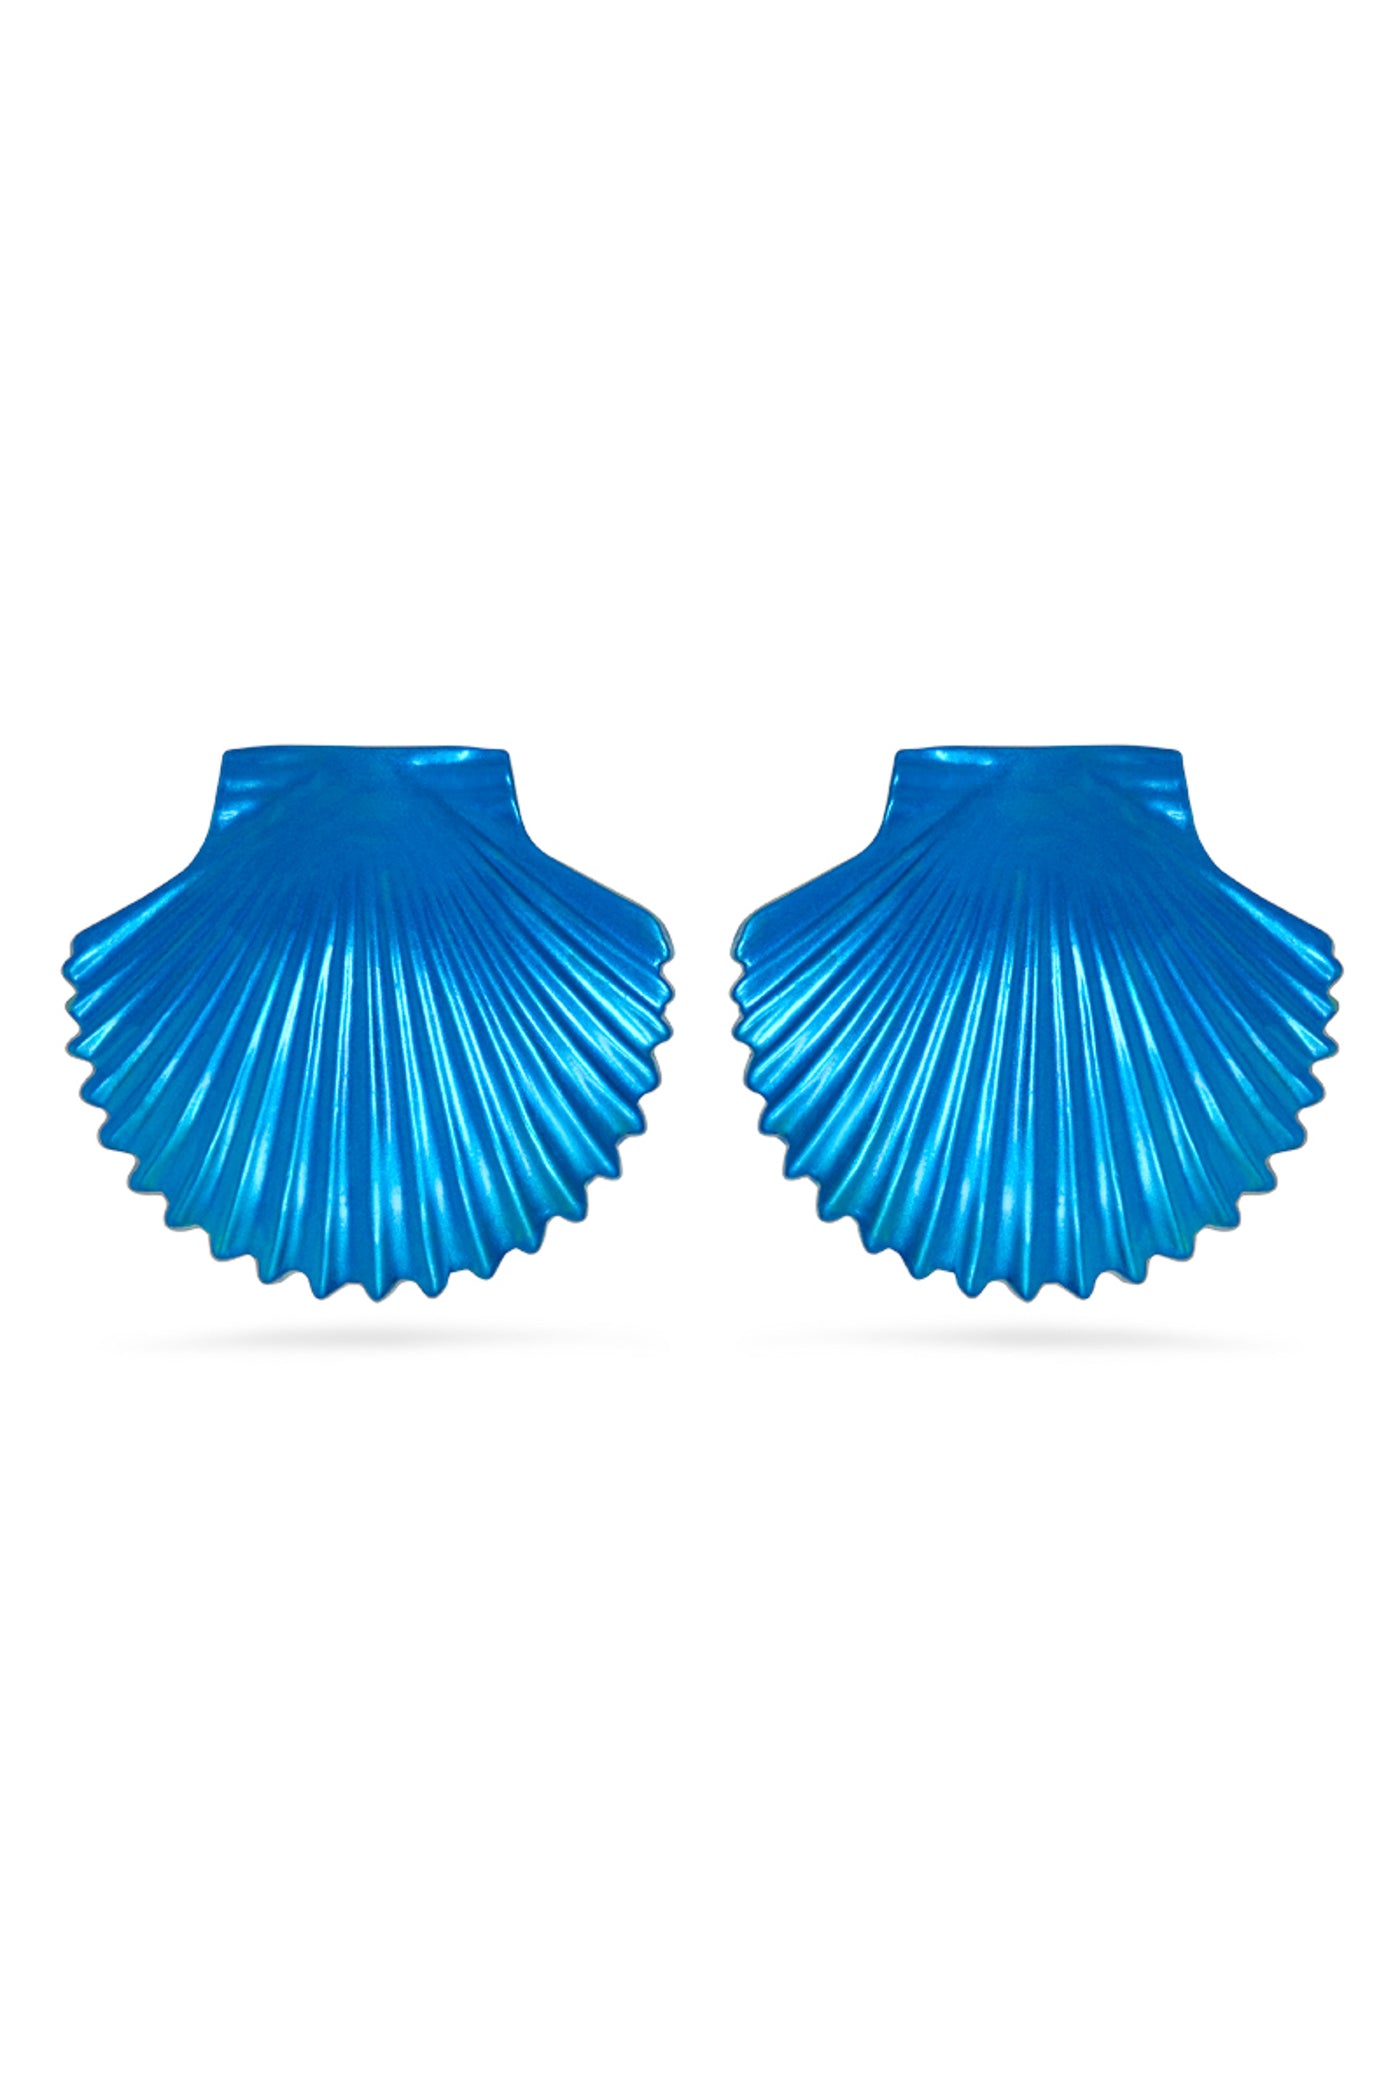 Valliyan blue top shell earrings fashion jewellery online shopping melange singapore indian designer wear